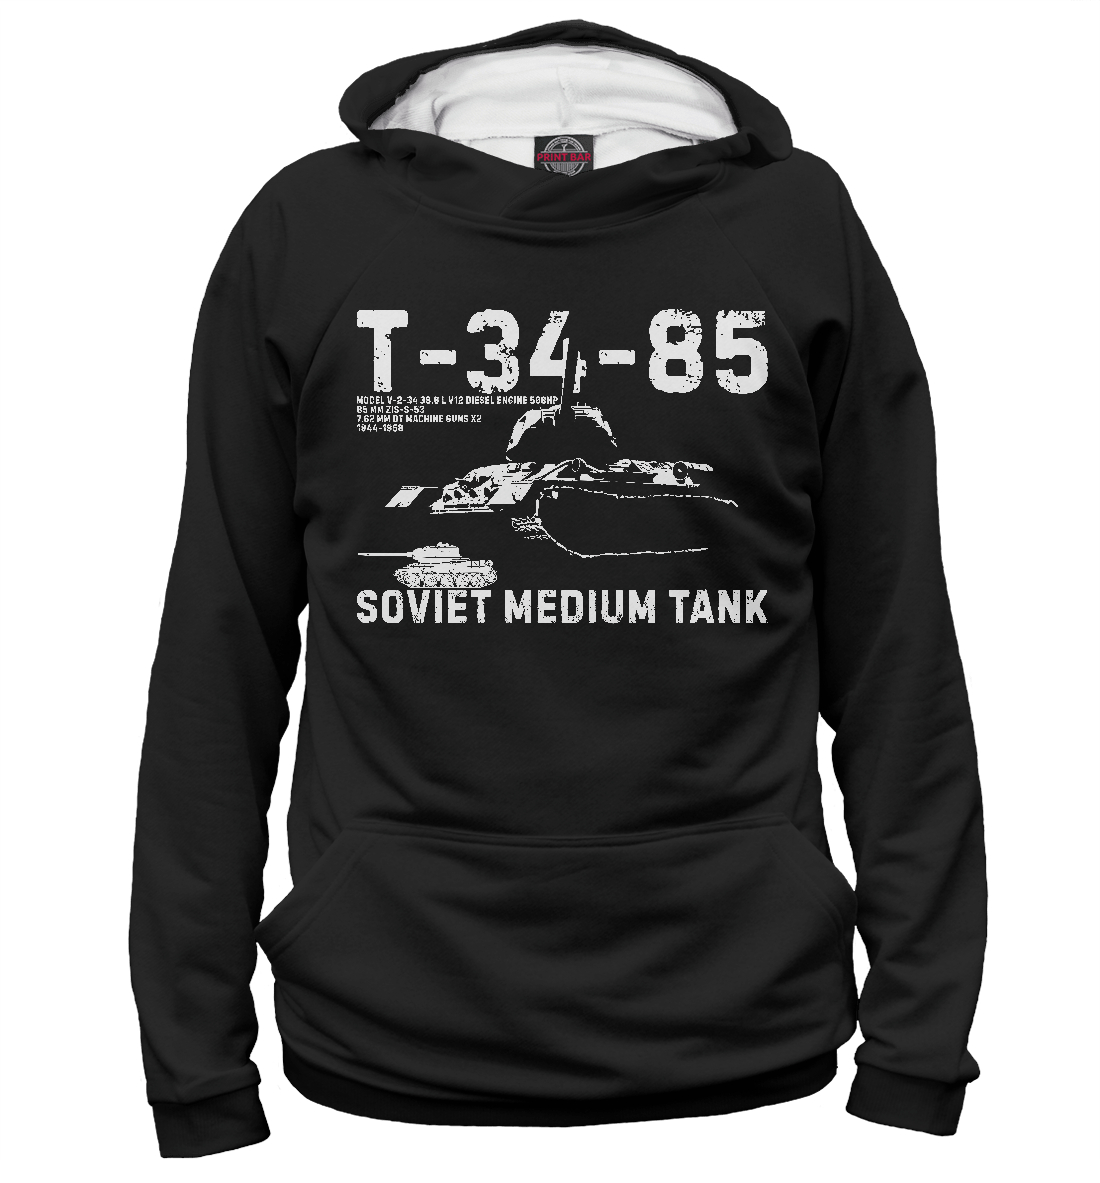 Мужской Худи с принтом Т-34-85 советский танк, артикул TNK-419312-hud-2mp